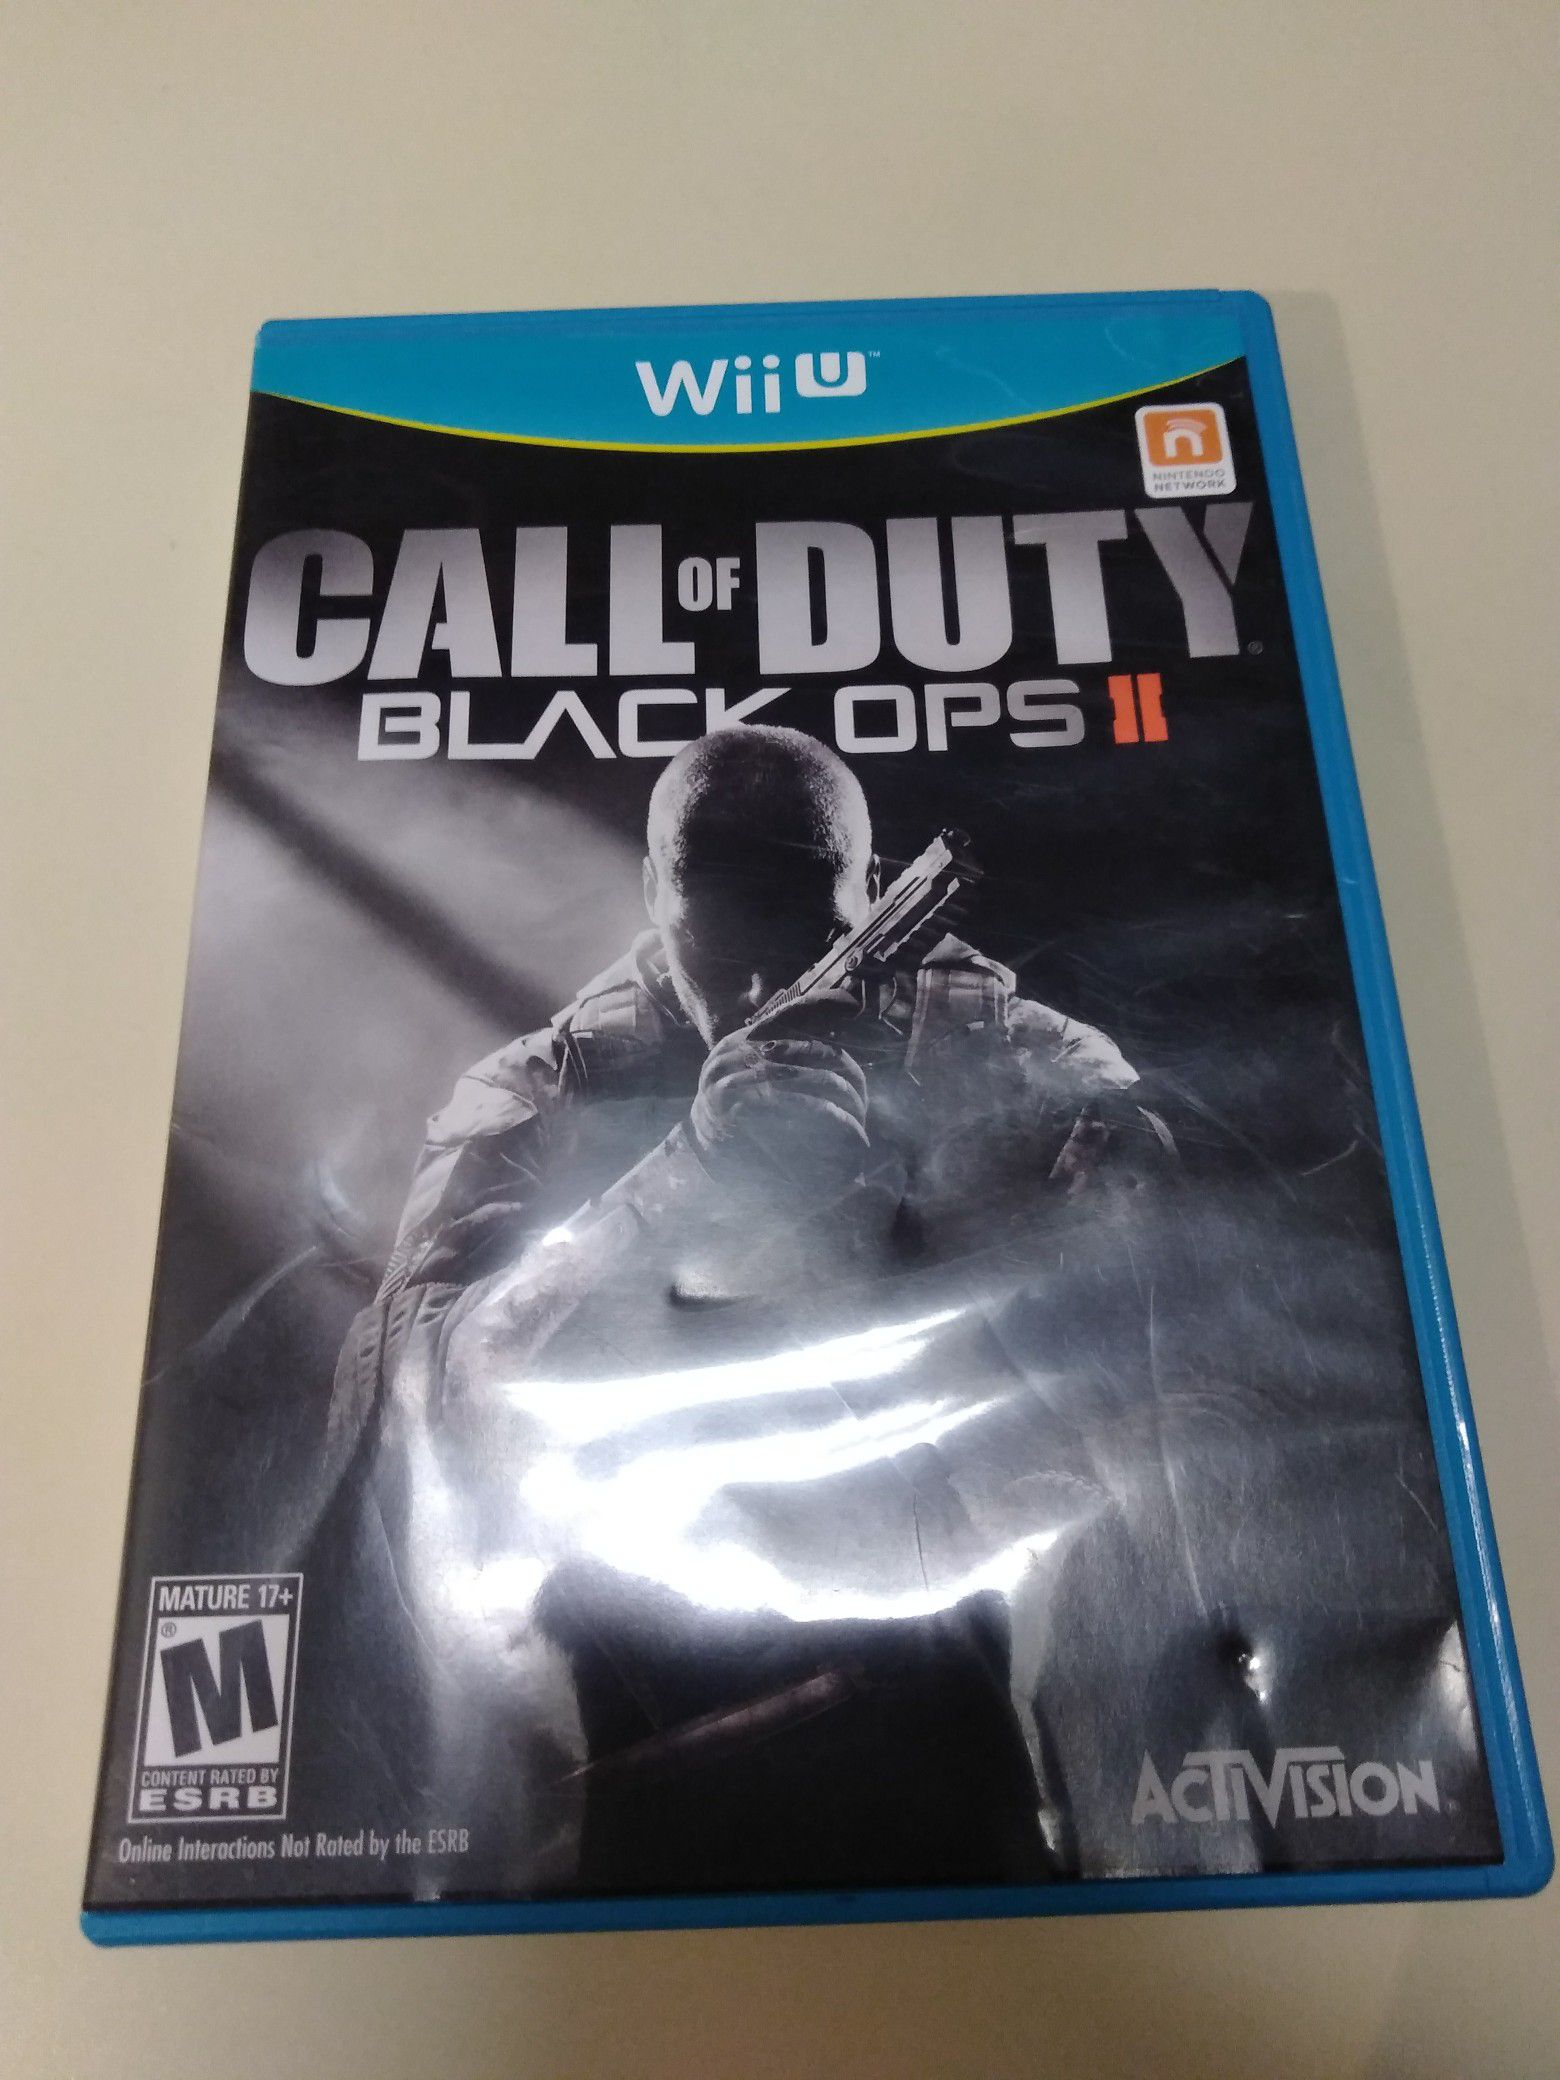 Call of duty Black Ops II for the Nintendo Wii U